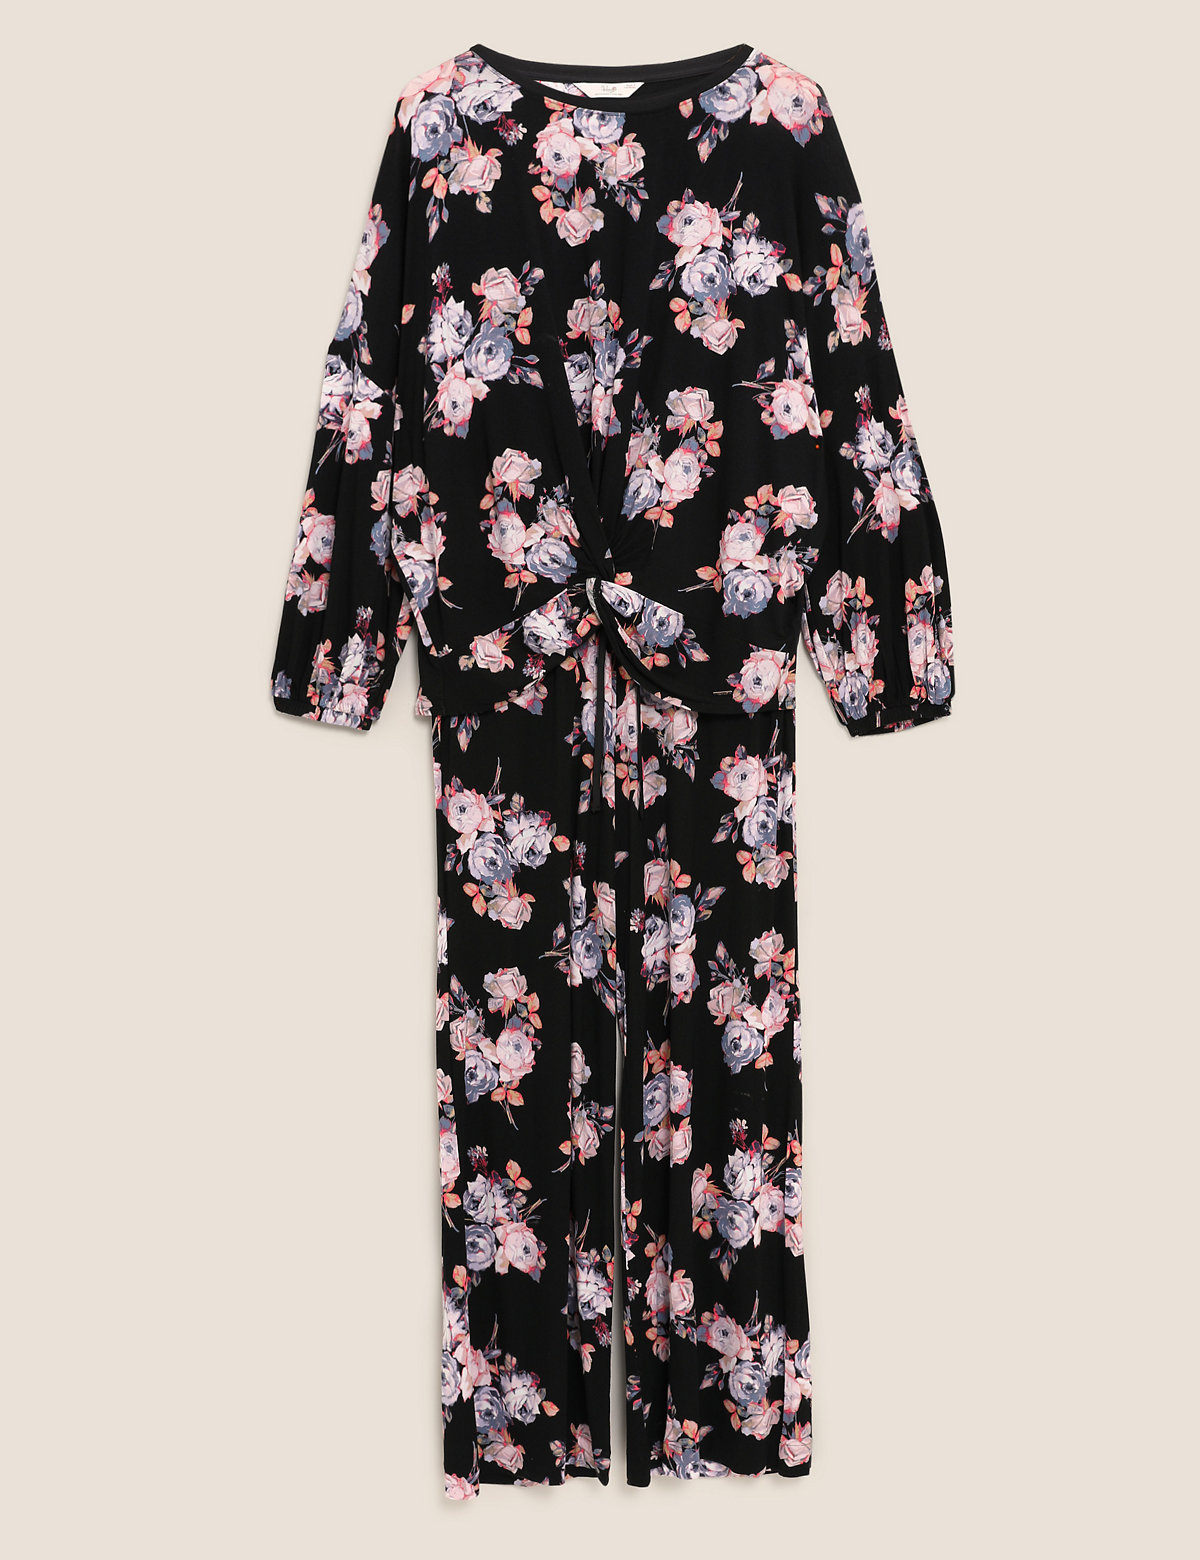 Jersey Floral Print Pyjama Set